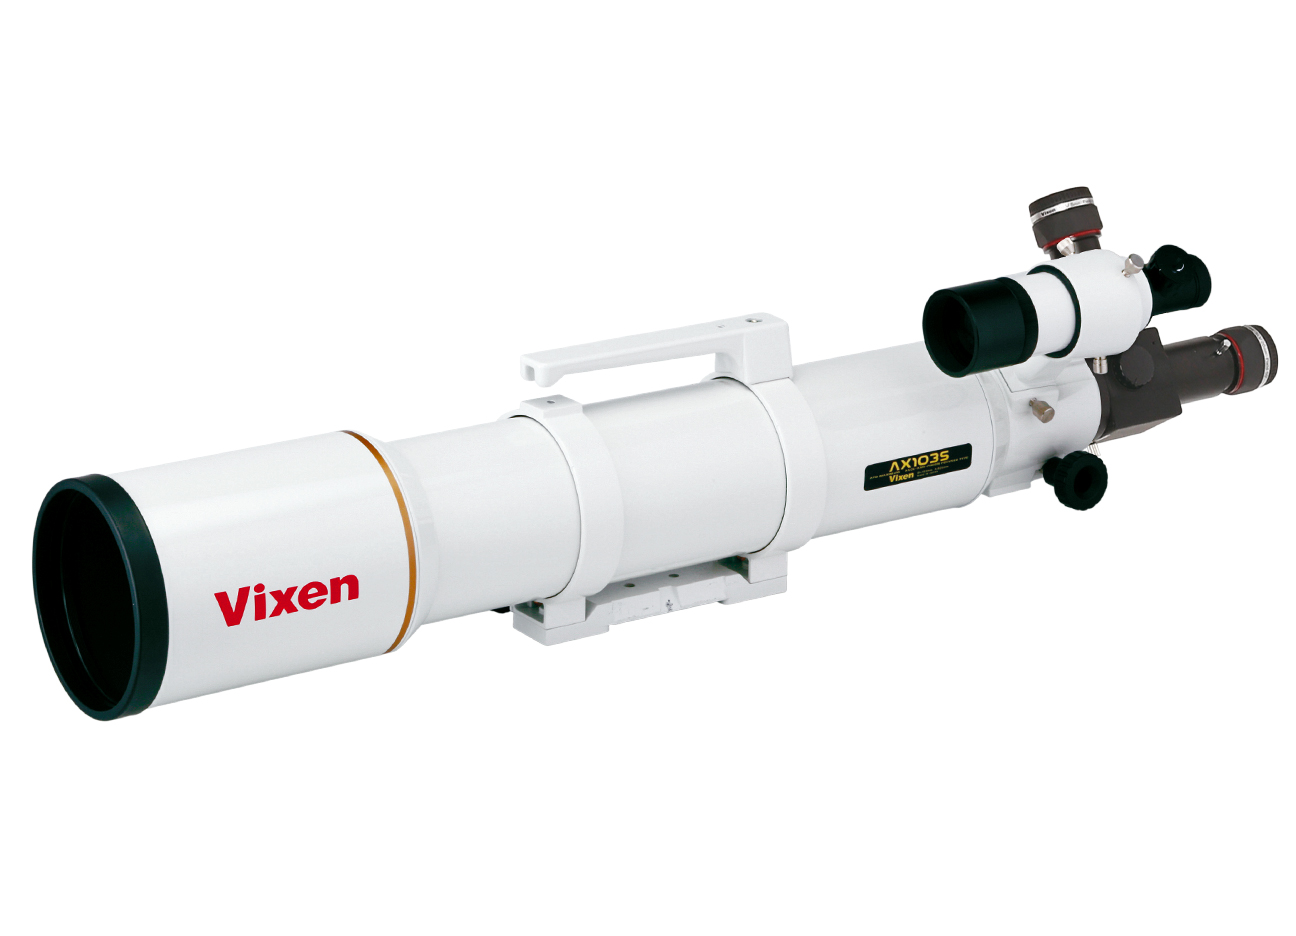 Vixen AX103S apochromatischer Refraktor - optischer Tubus